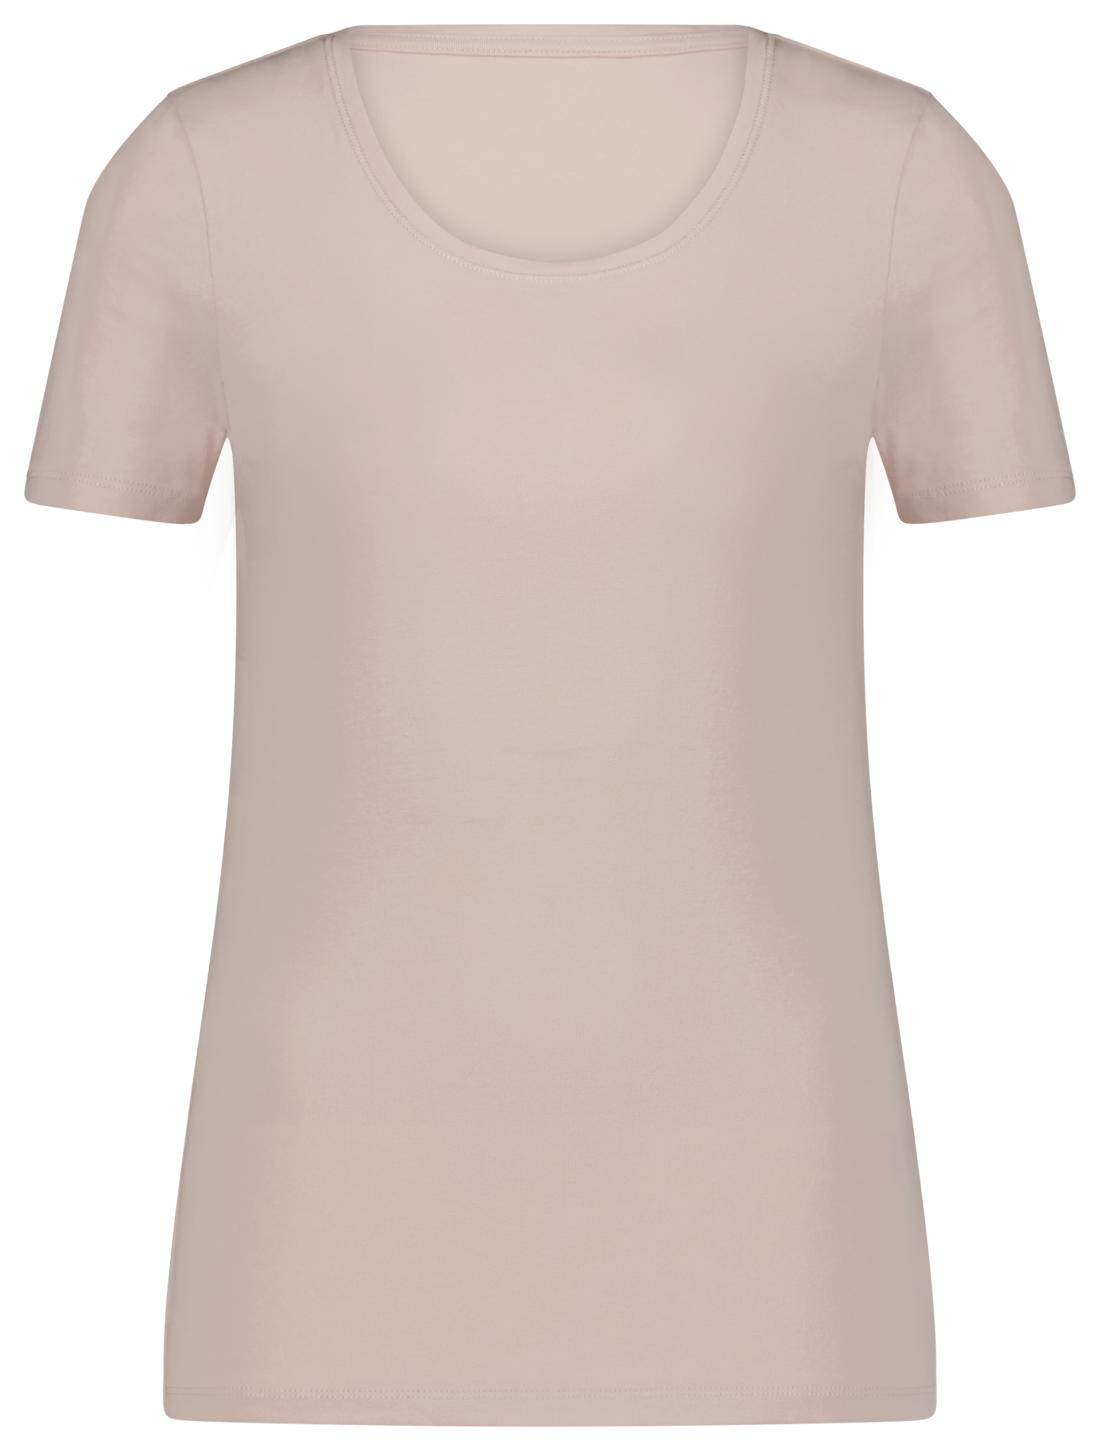 Rabatt 70 % Trucco T-Shirt DAMEN Hemden & T-Shirts Bi-Material Rosa S 